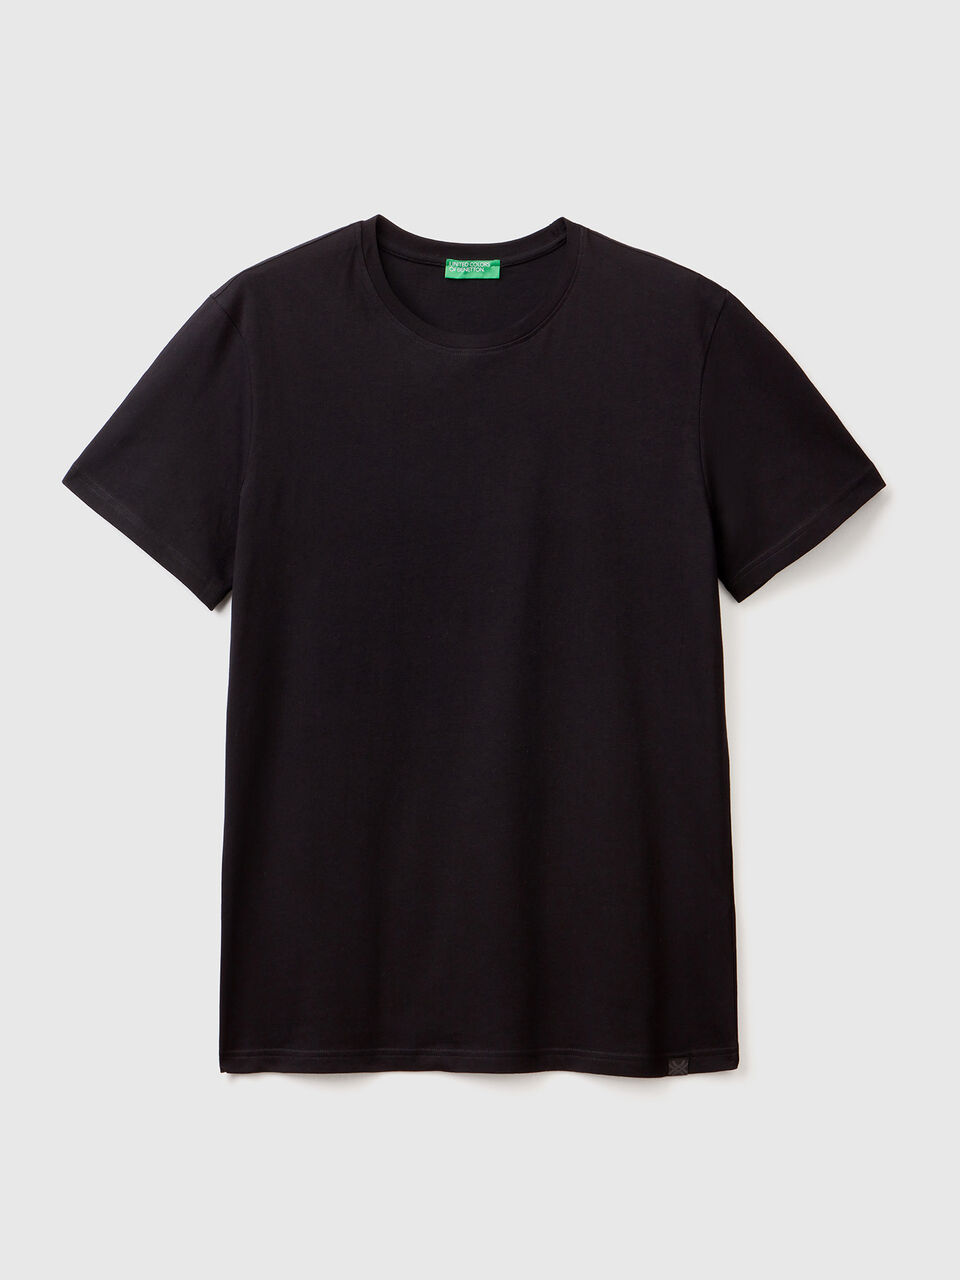 Black t-shirt - Black | Benetton